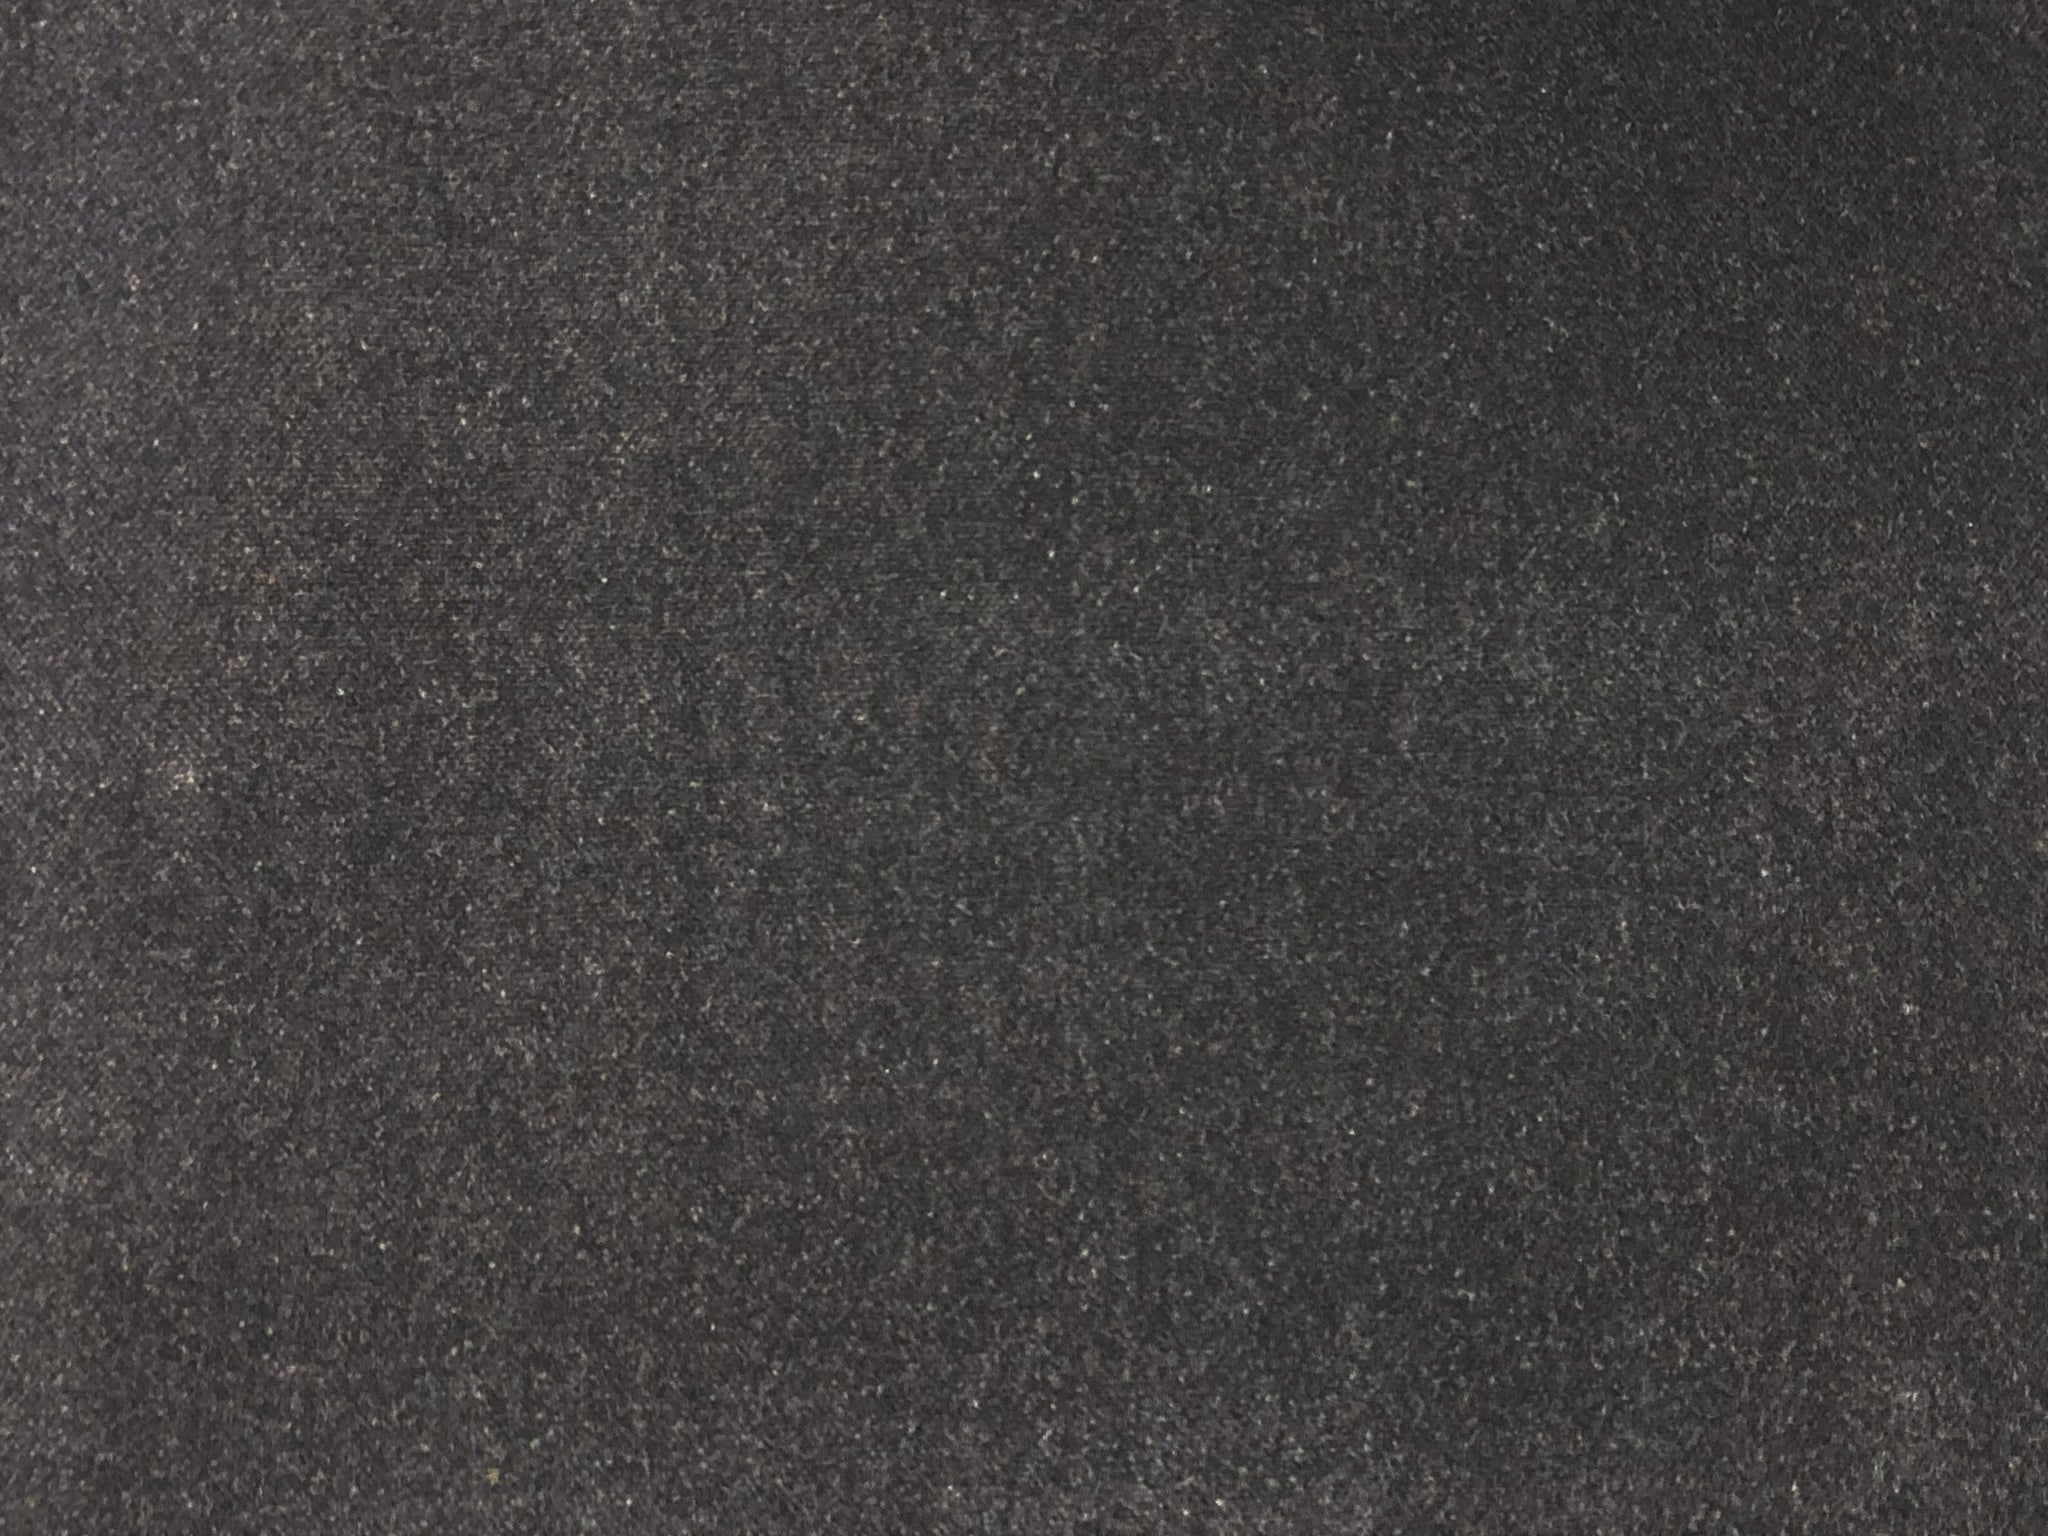 Onyx Black Velvet Upholstery Fabric, Fabric Bistro, Columbia